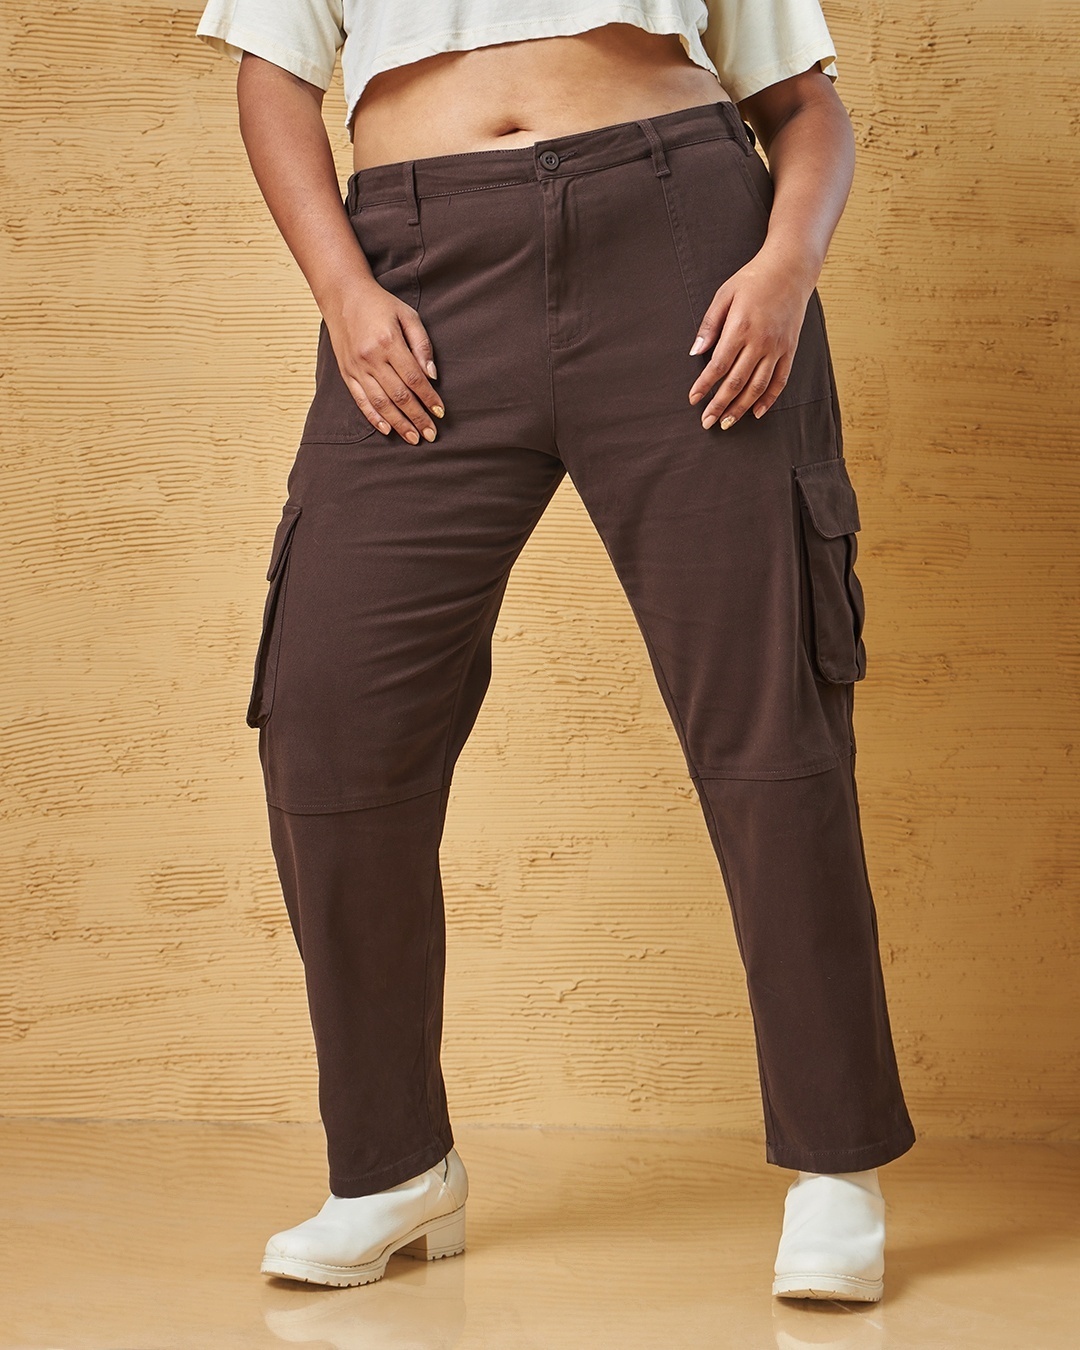 Cargo Pants Women High Waist Brown Baggy Jeans Fashion Drawstring Belt  Trousers | eBay